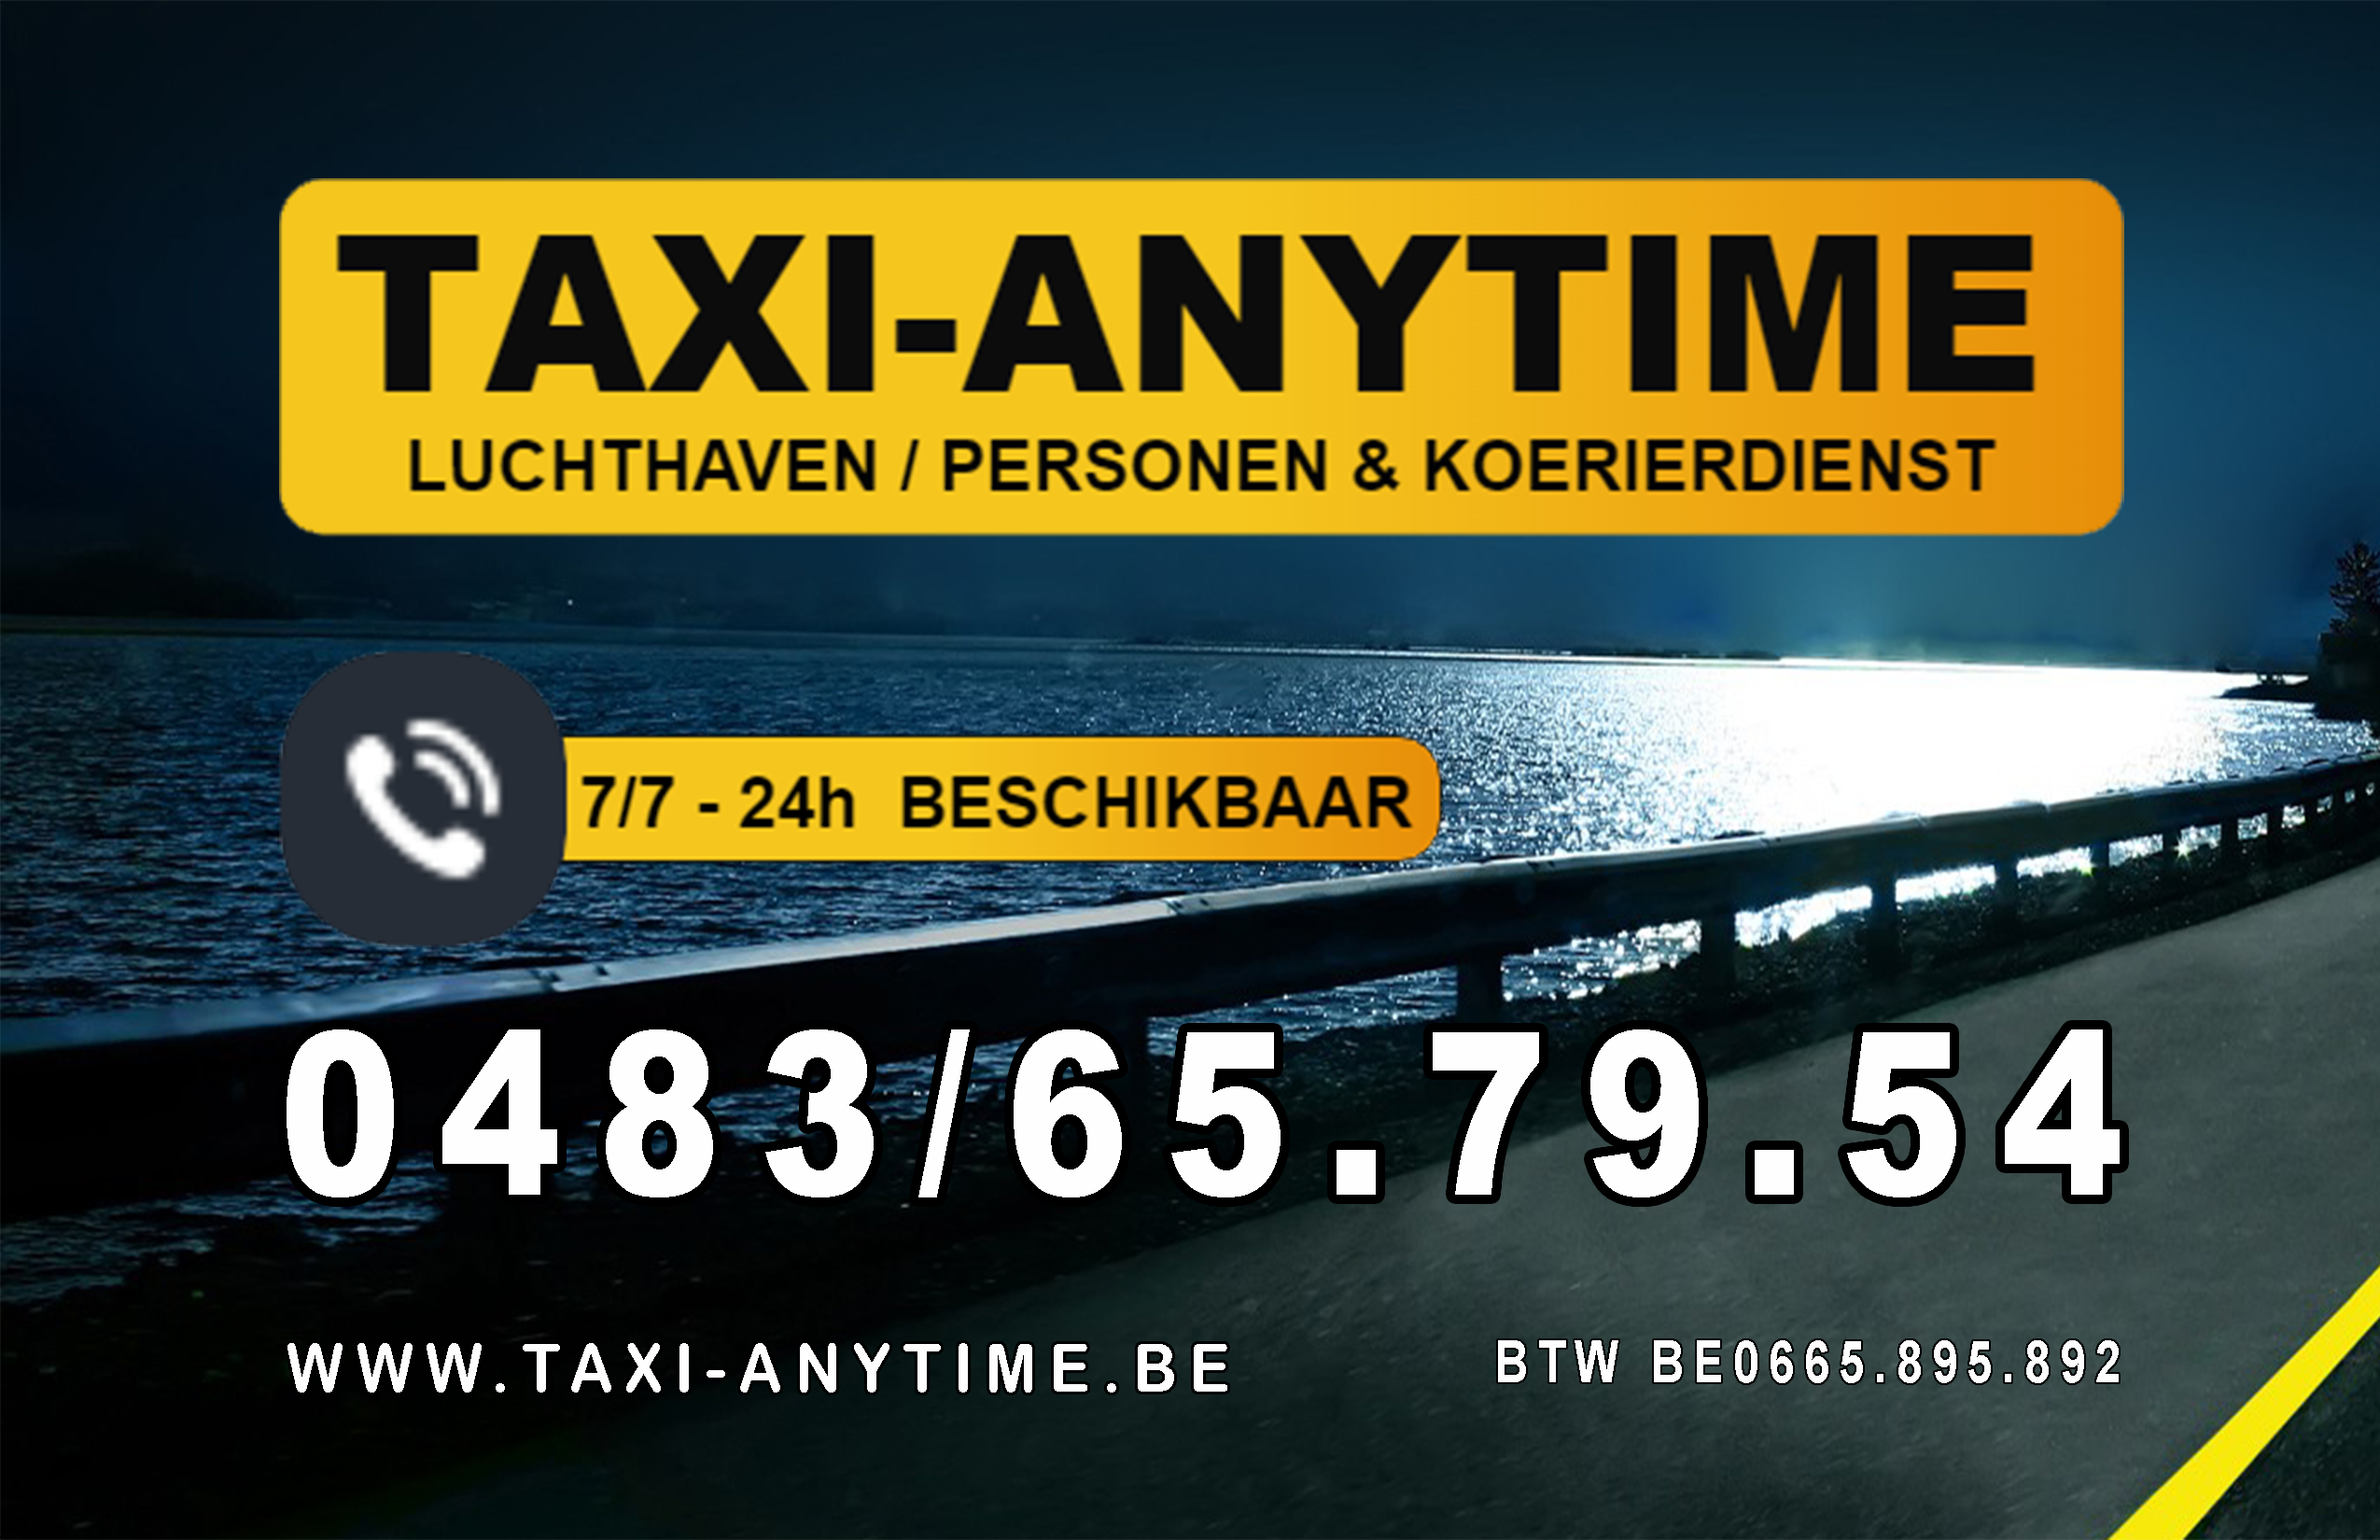 taxibedrijven met luchthavenvervoer Mechelen Taxi-anytime